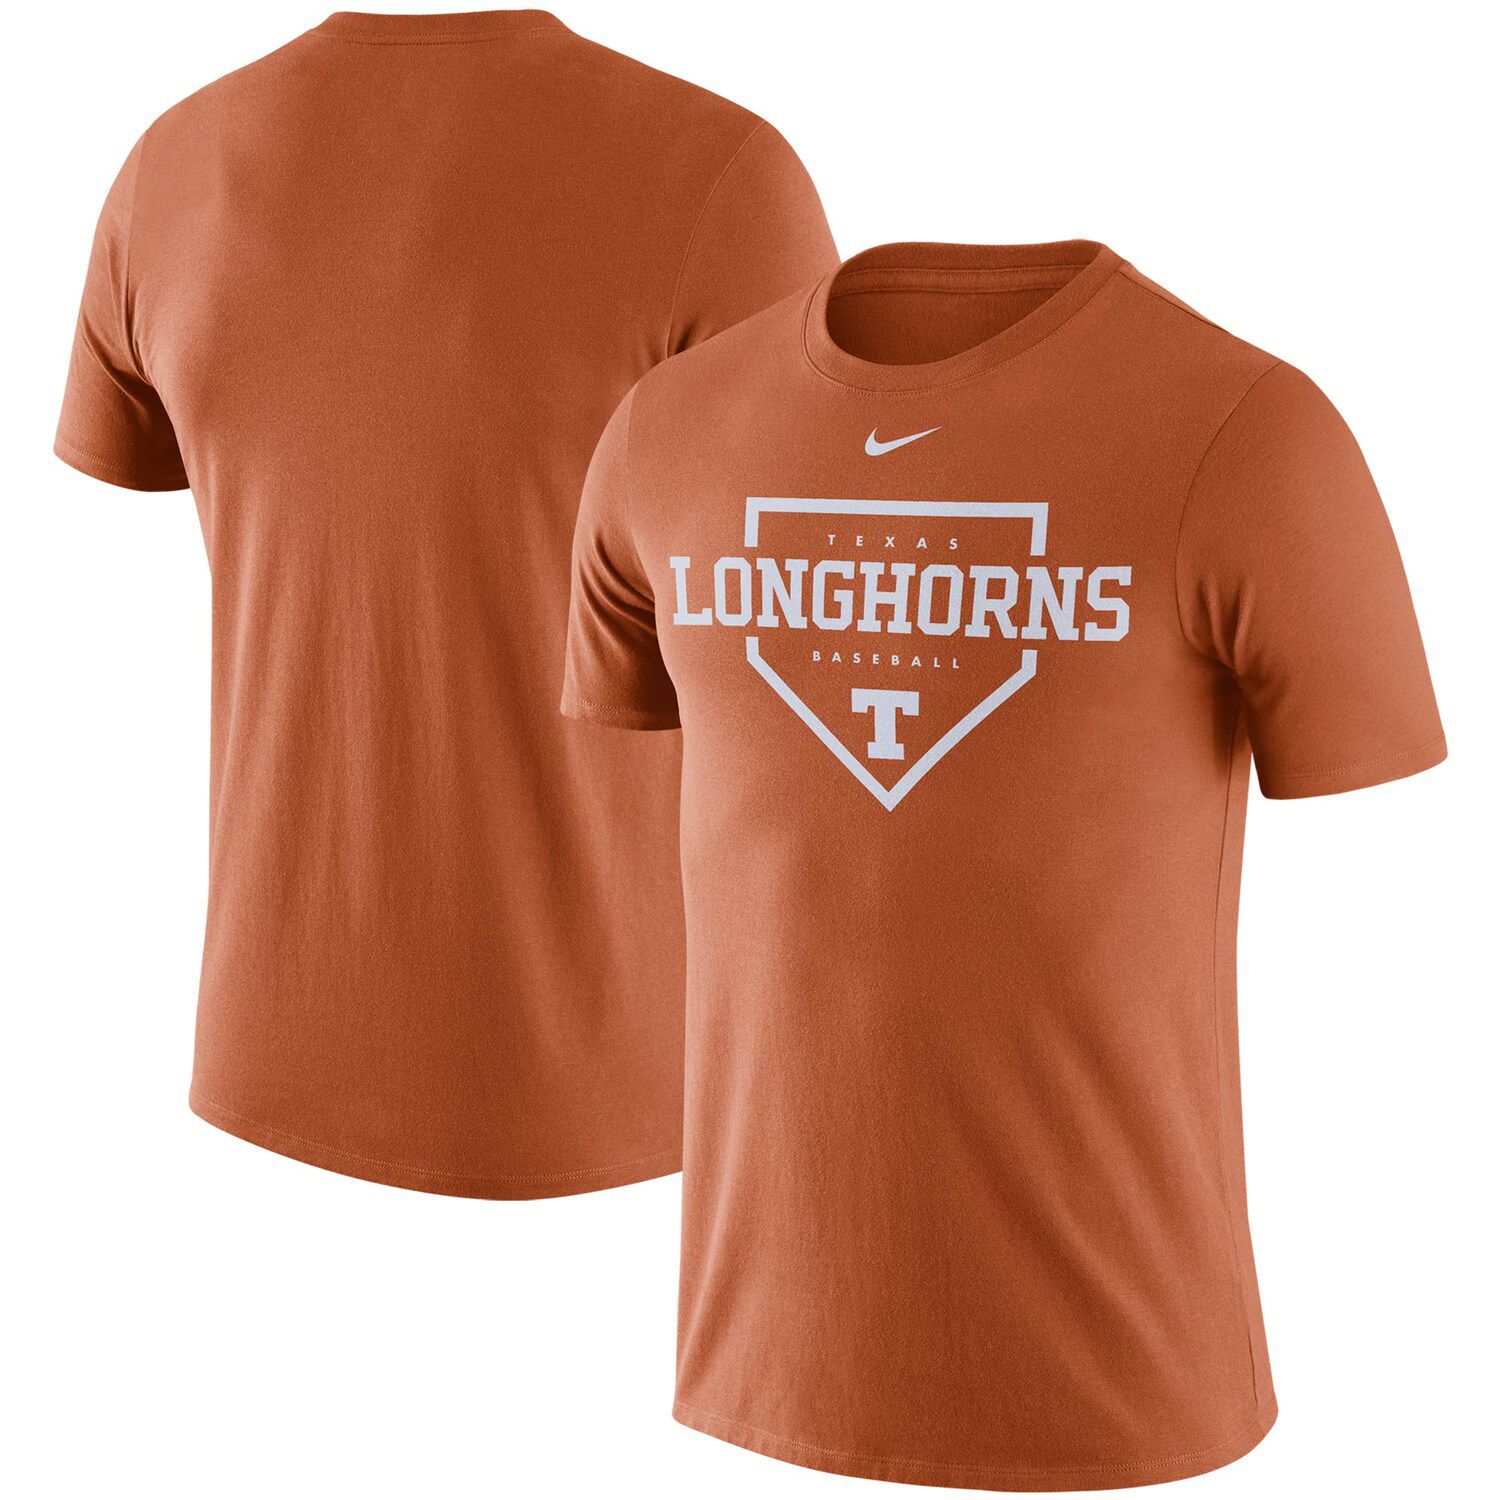 longhorns baseball jersey